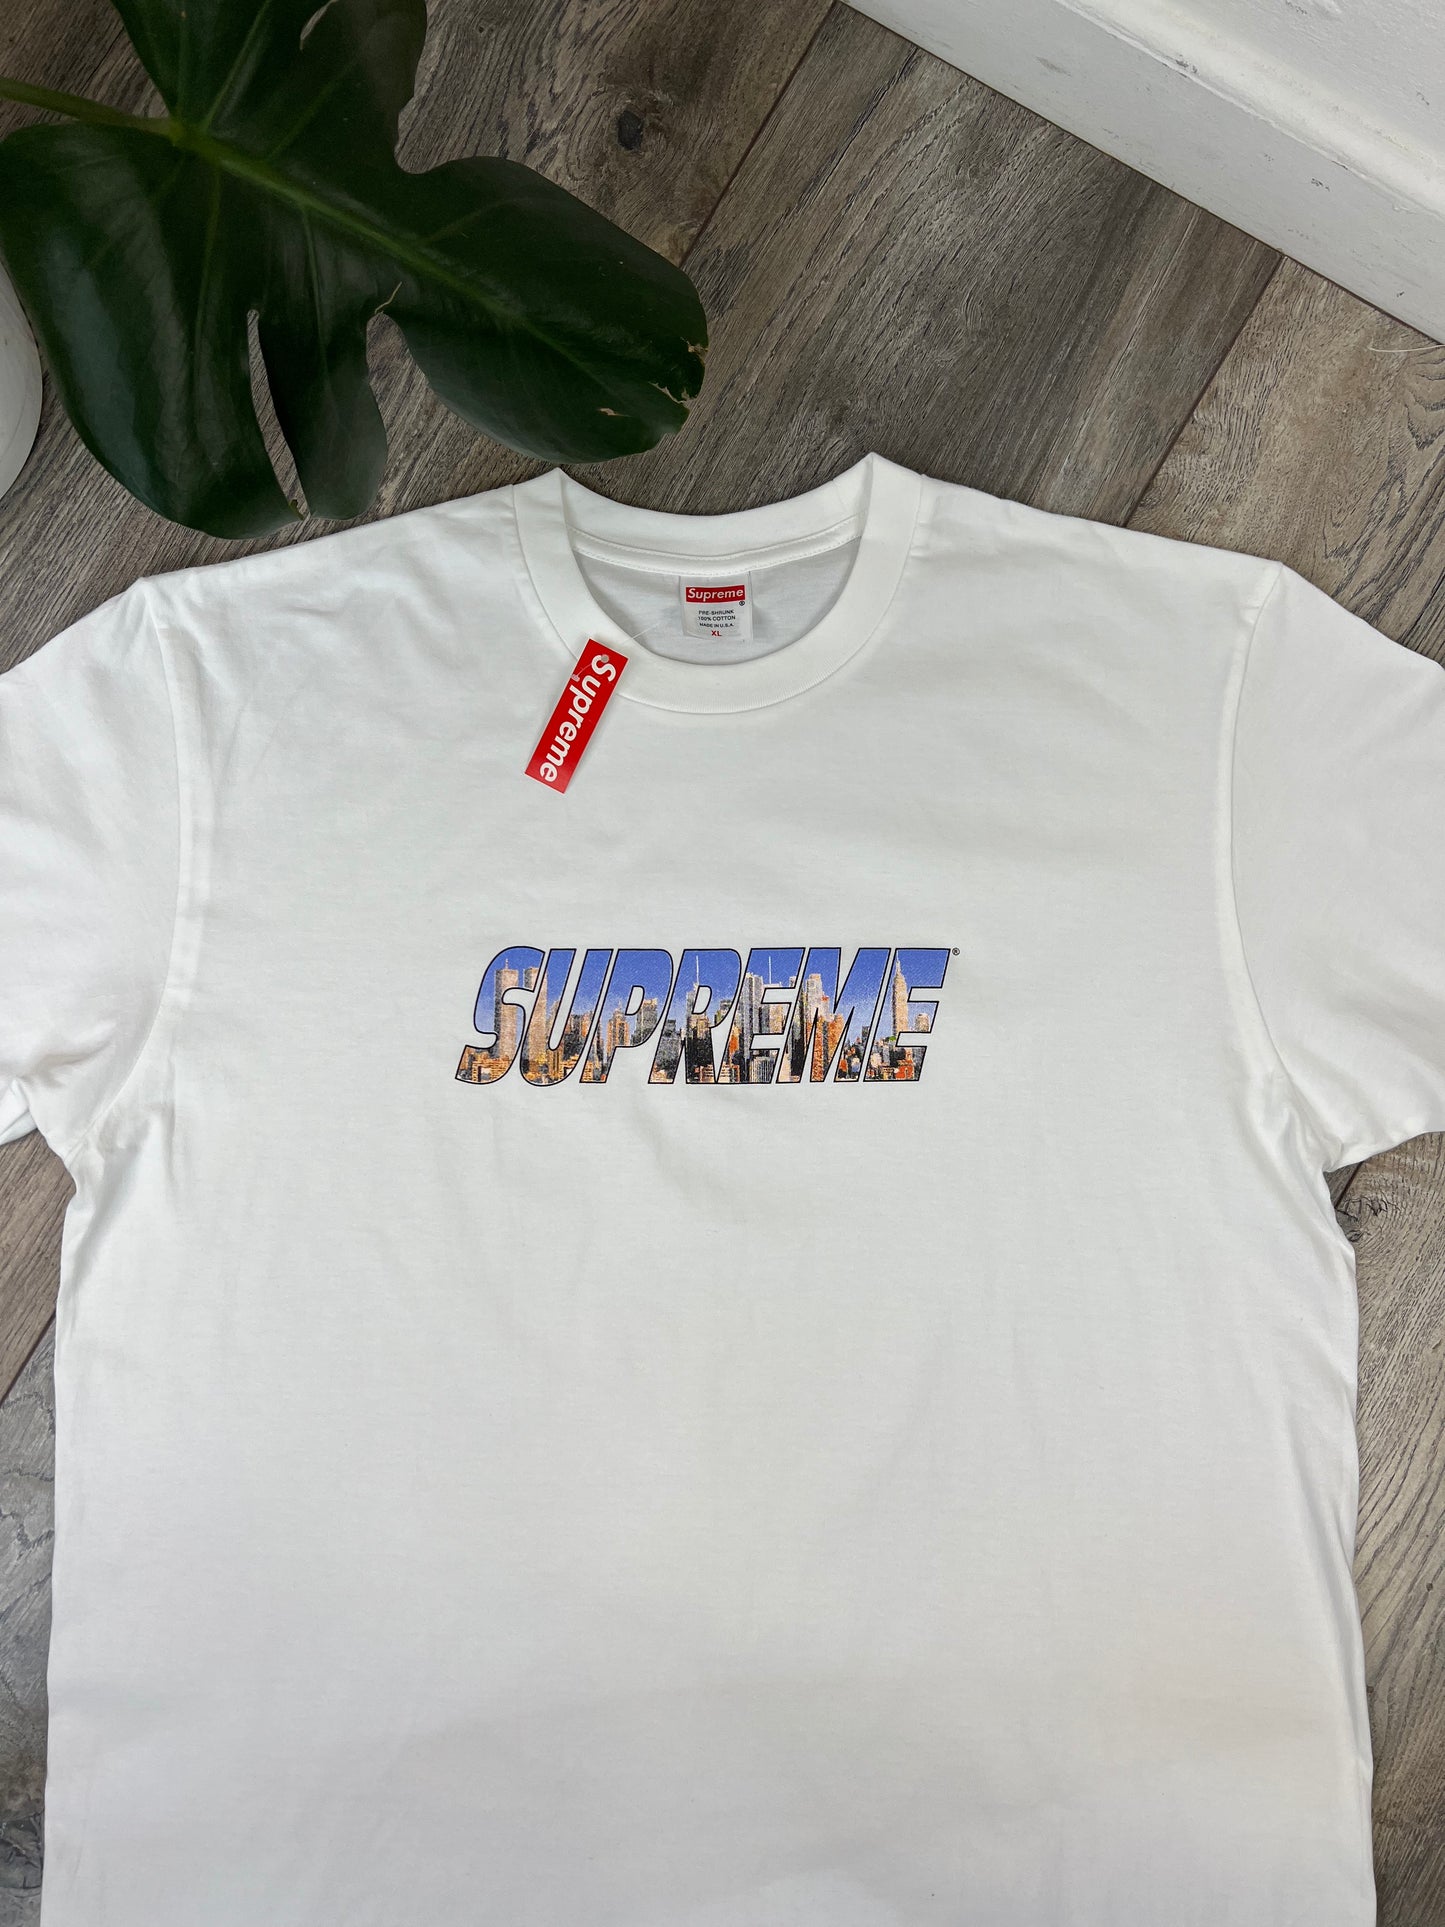 Camiseta Supreme